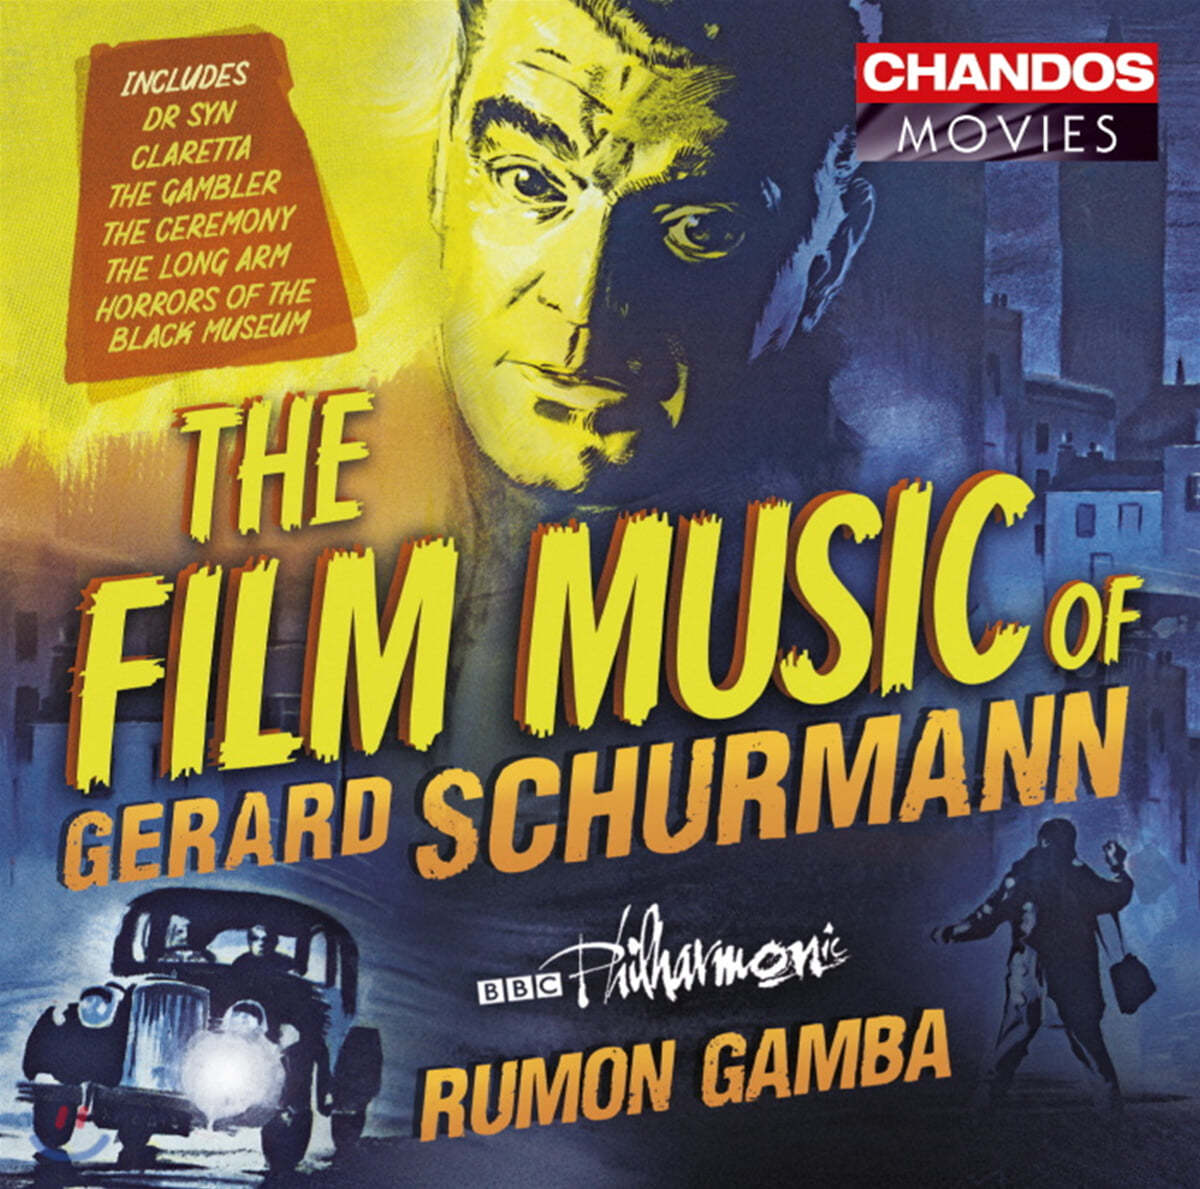 Rumon Gamba 제라드 셔먼의 영화 음악 (The Film Music of Gerard Schurmann)